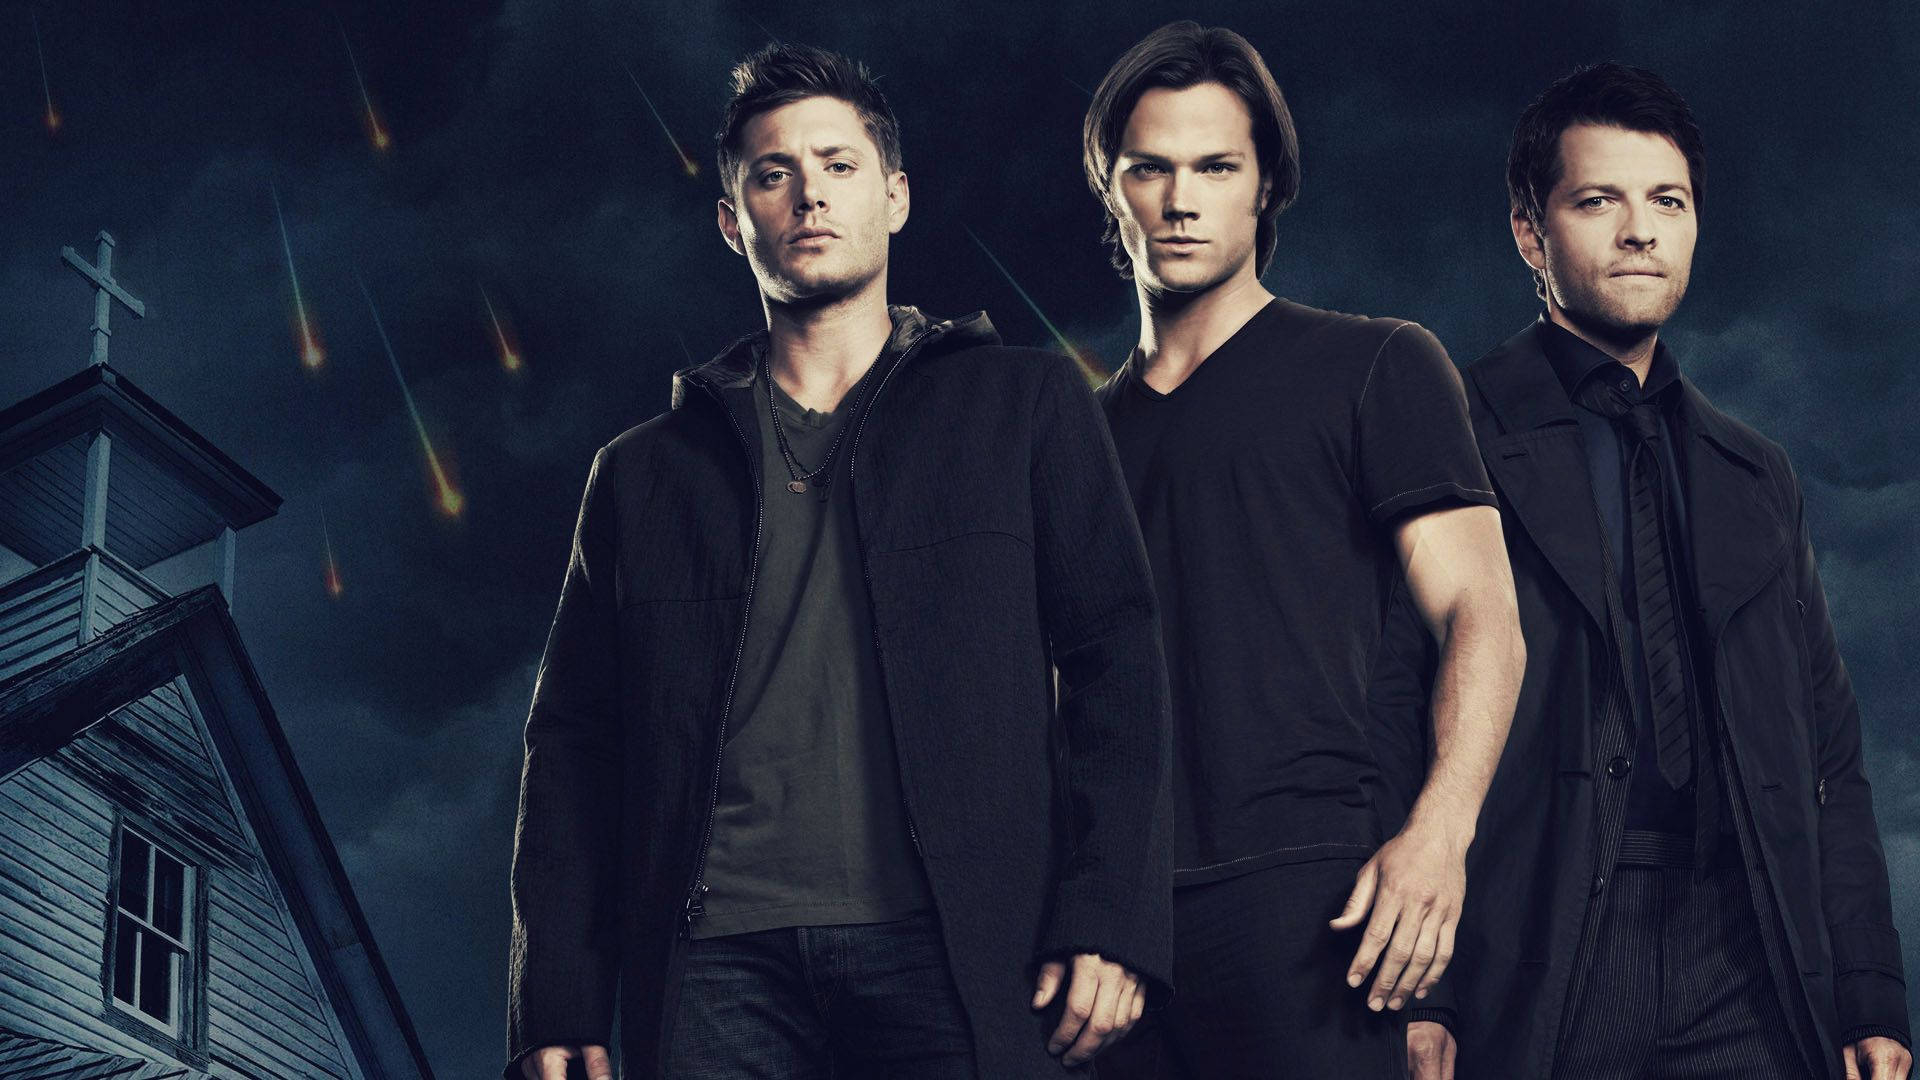 Supernatural Castiel With Dean And Sam Background